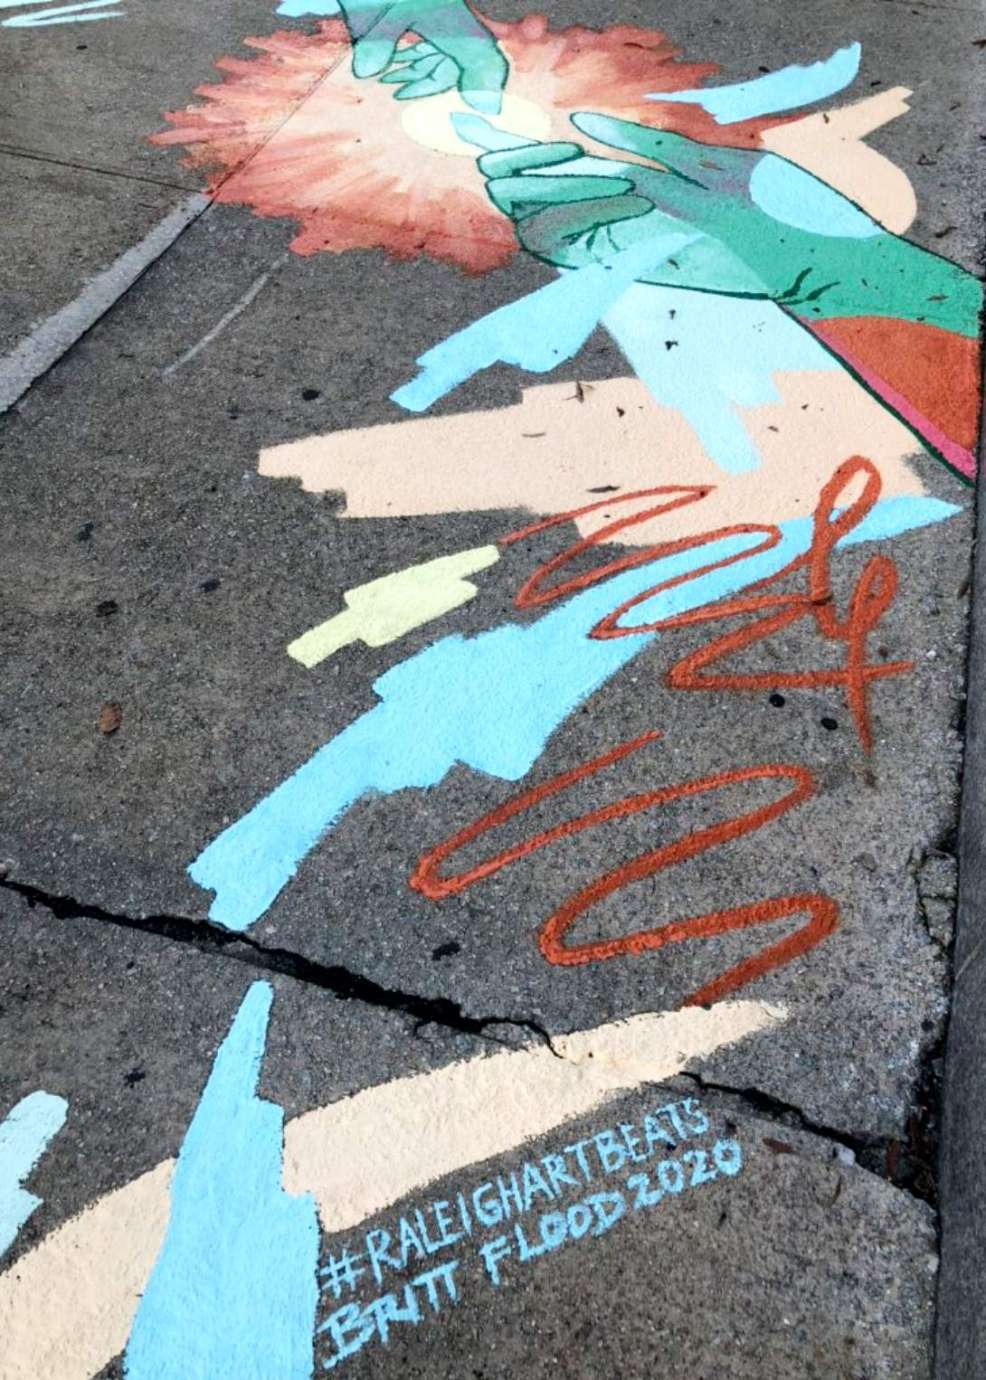 Sidewalk mural by artist Britt Flood